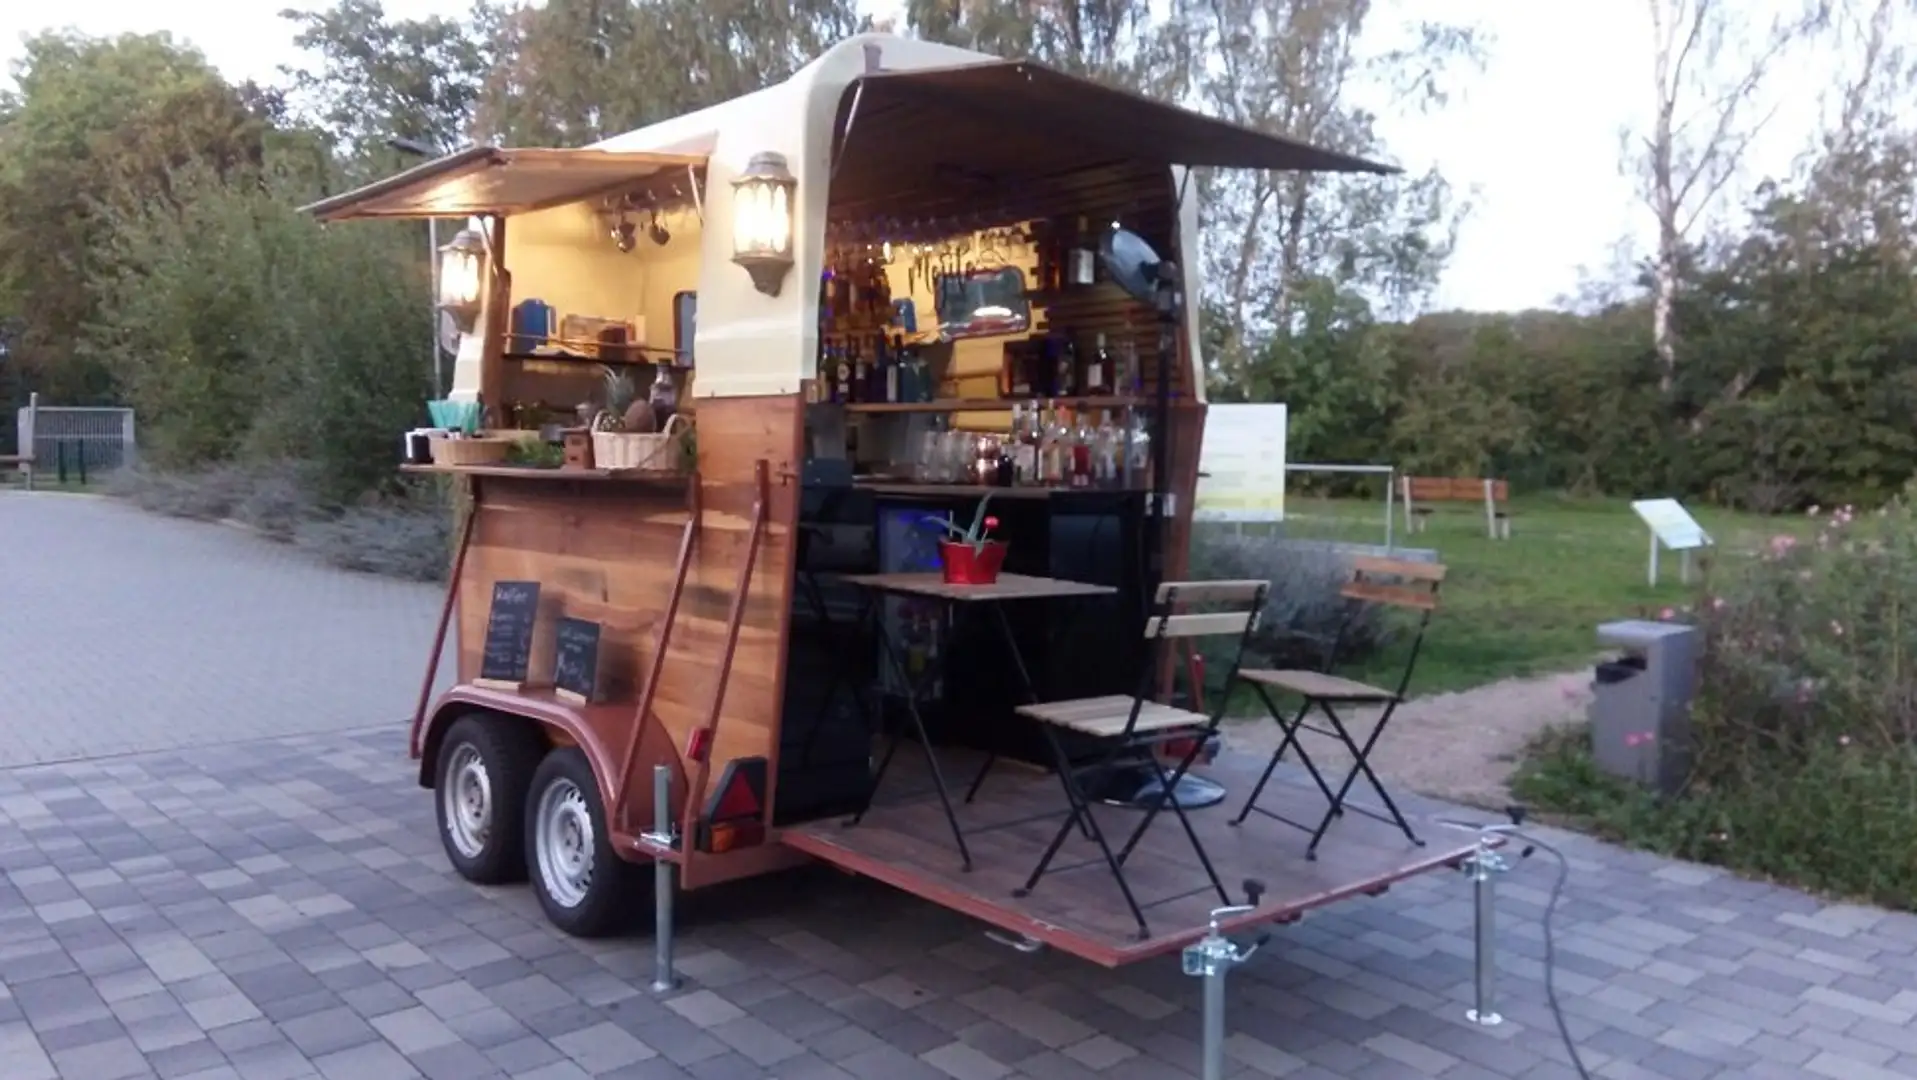 Trailer-Anhänger Verkaufsanhänger mobile Bar Pferdeanhänger Bej - 1